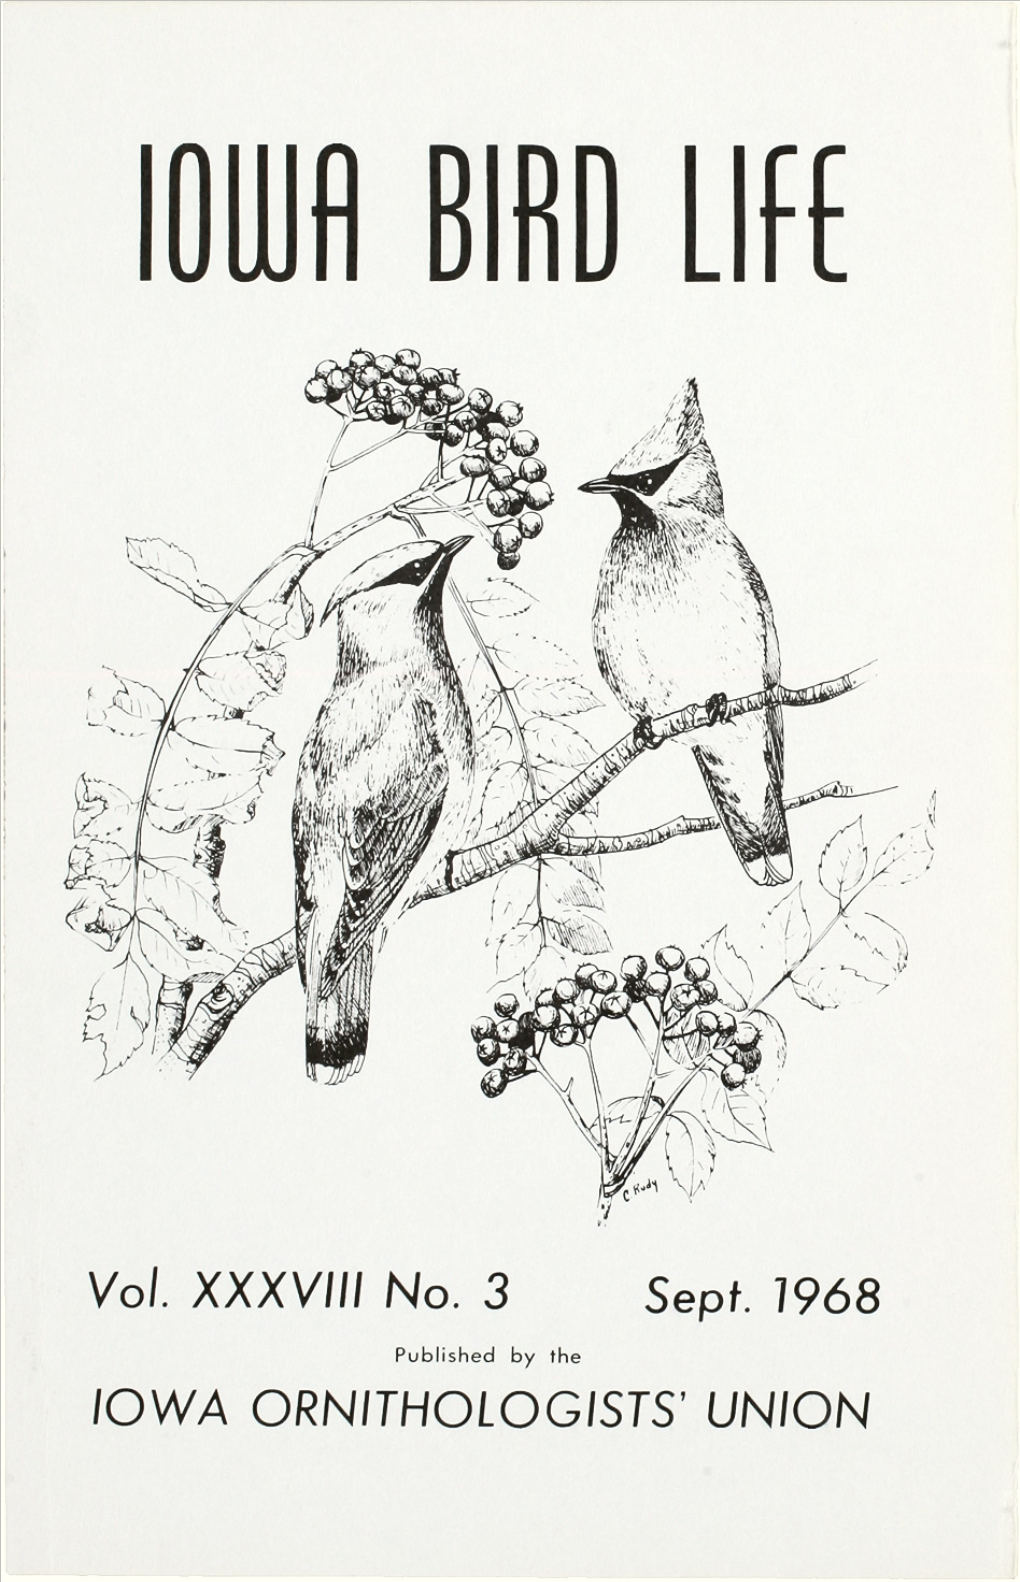 Vol. XXXVIII No. 3 Sept. 1968 IOWA ORNITHOLOGISTS' UNION